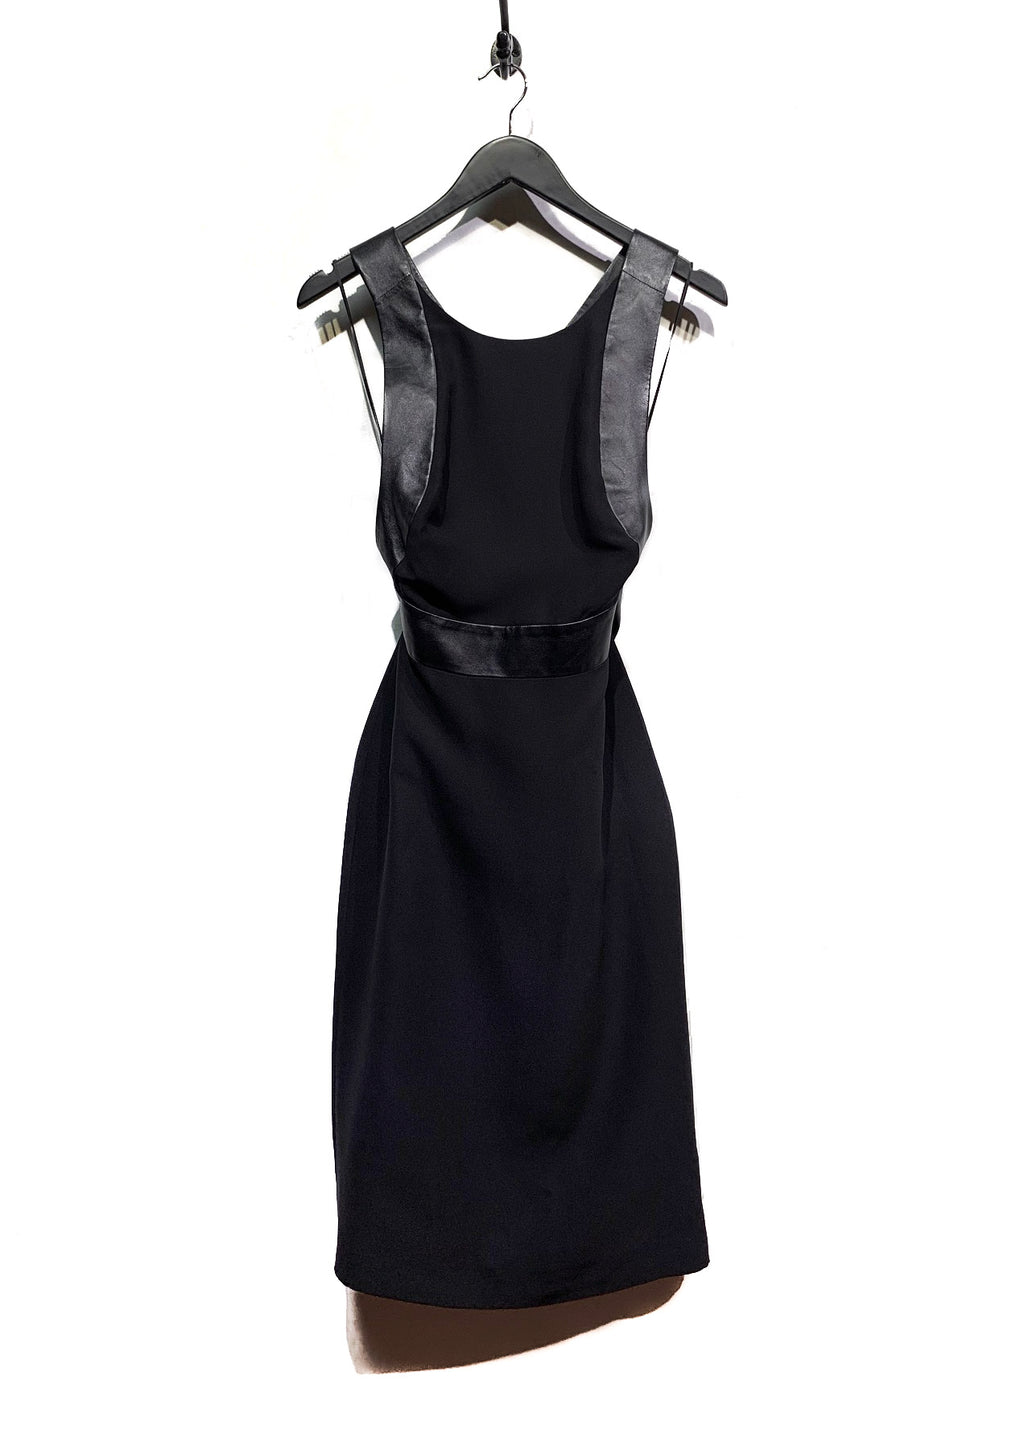 Gucci Black Leather-Trimmed Criss Cross Dress